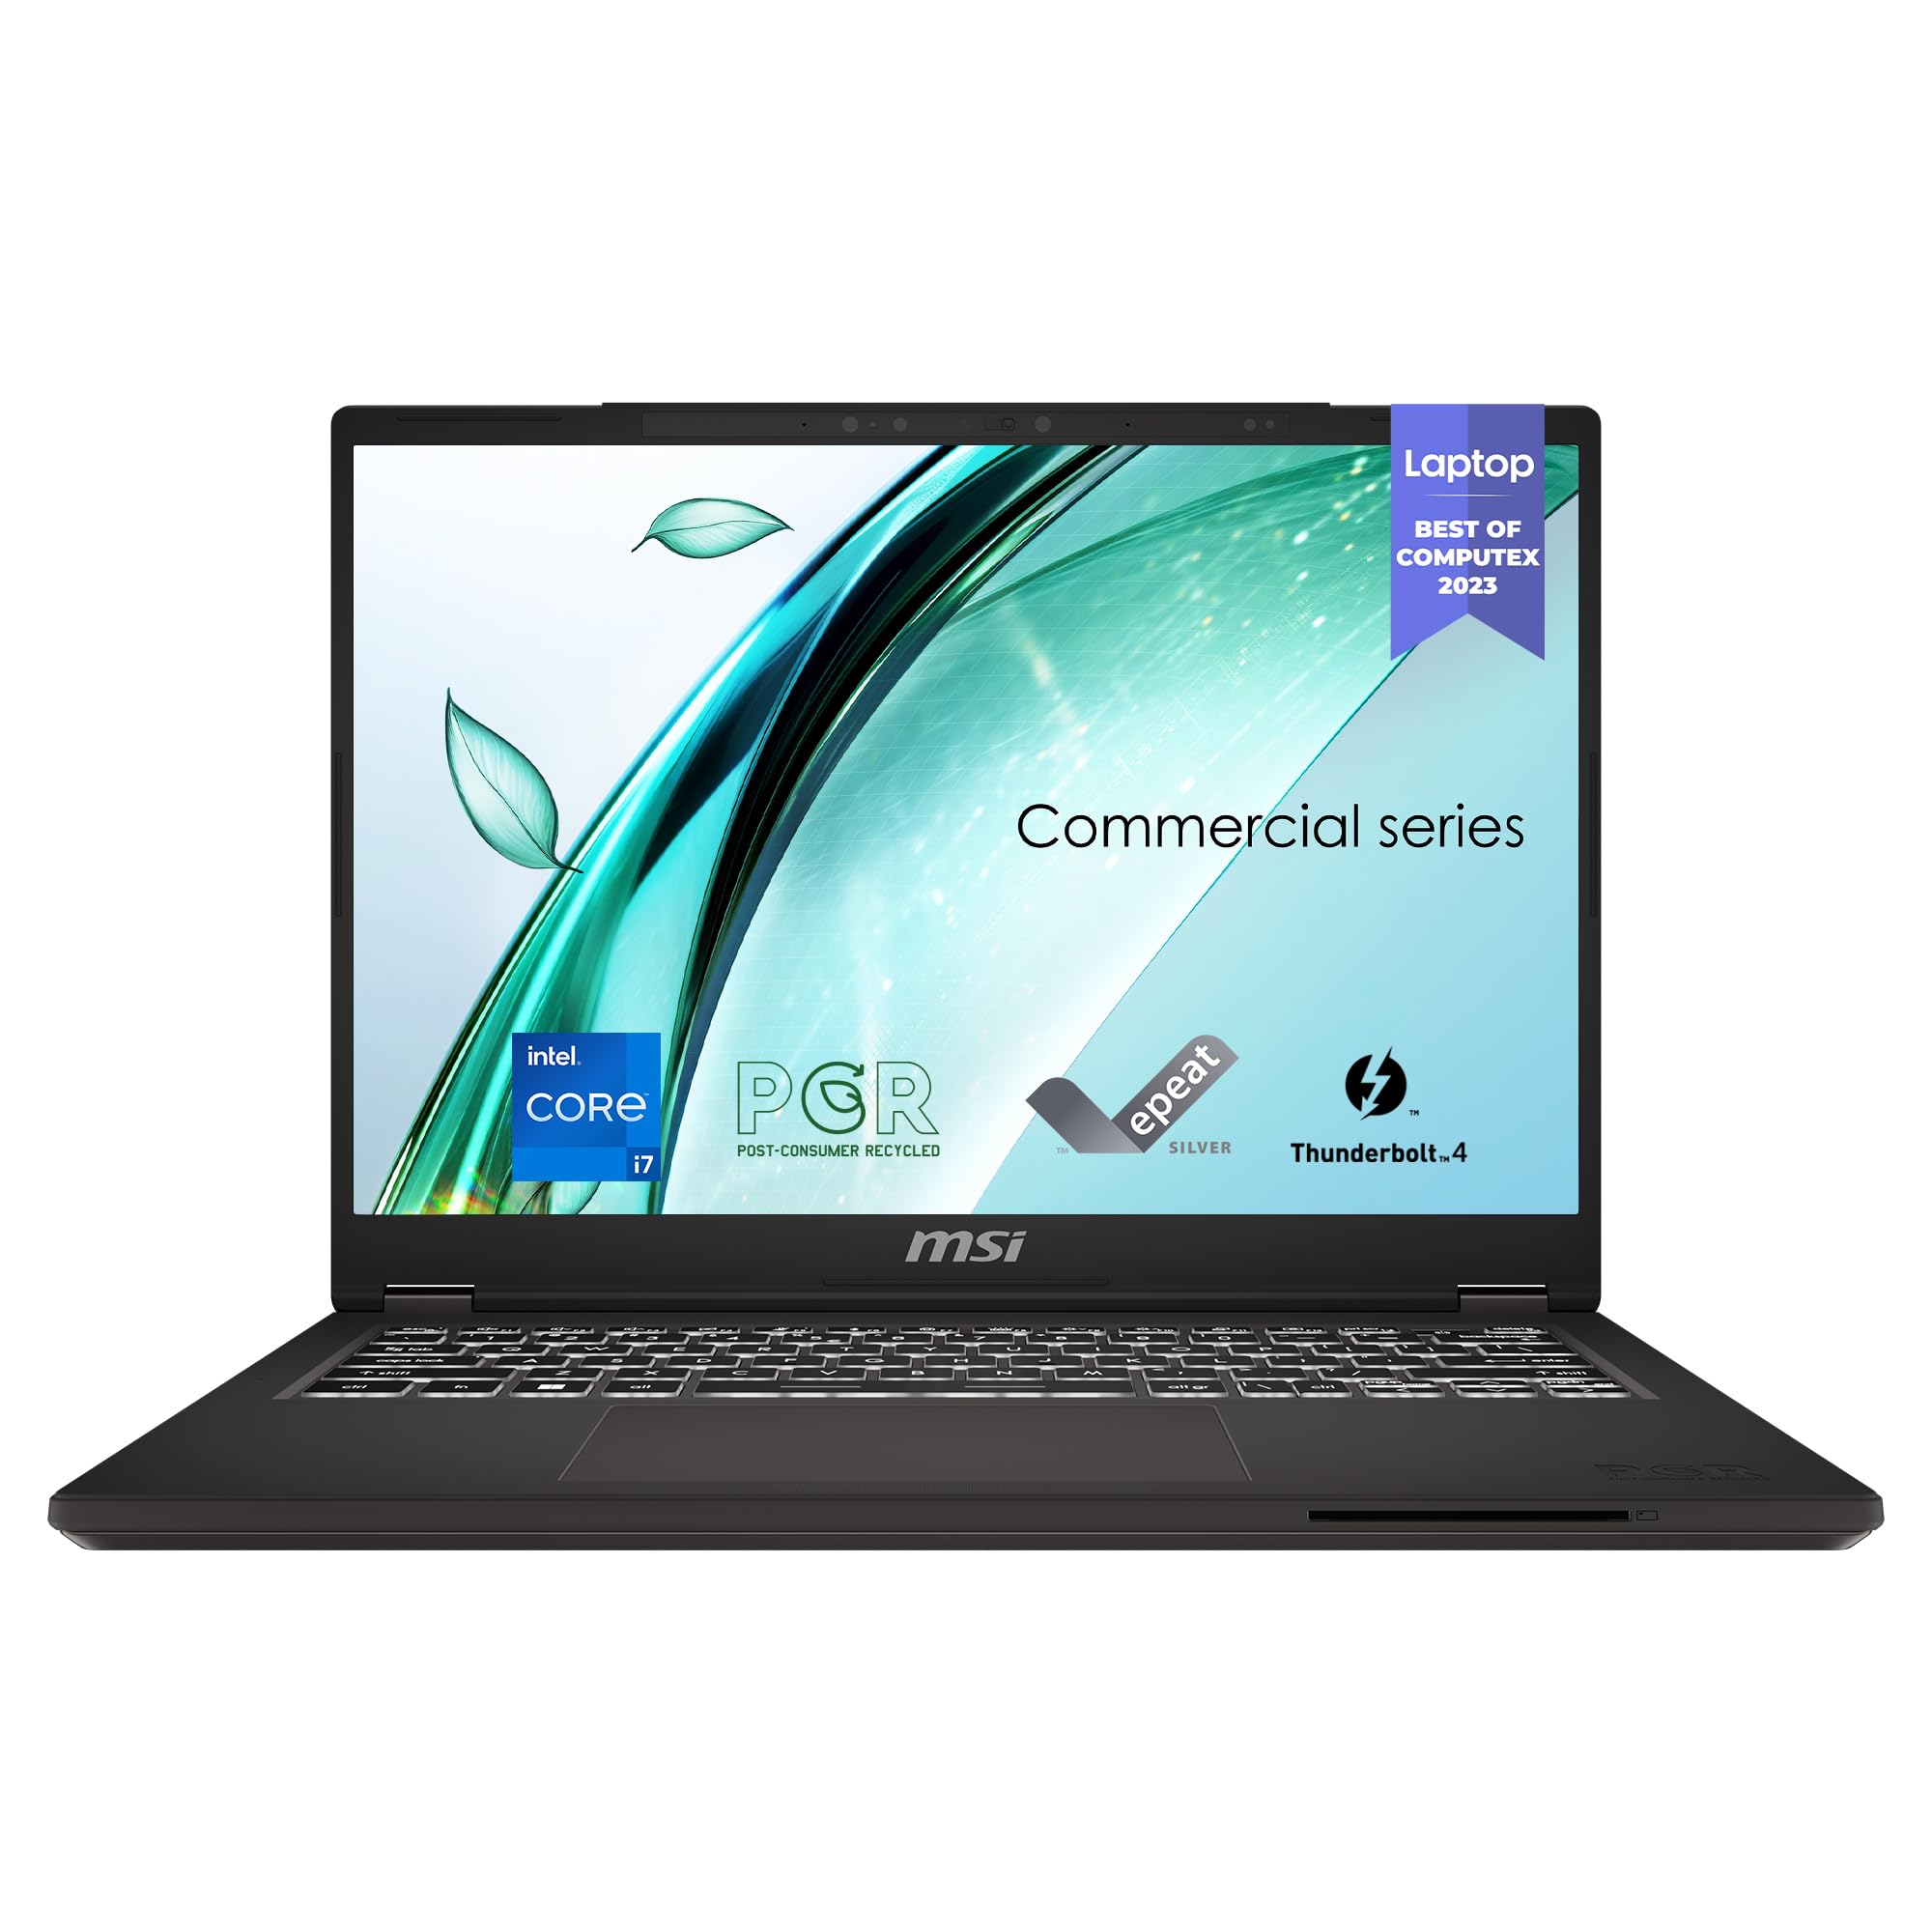 MSI Commercial 14 H Professional Laptop: 13th Gen Intel Core i5, 14” 60Hz Display, Intel Iris Xe, 16GB DDR4, 512GB NVMe SSD, Eco-Friendly, Fingerprint Reader, Win 11 Pro: A13MG-002US